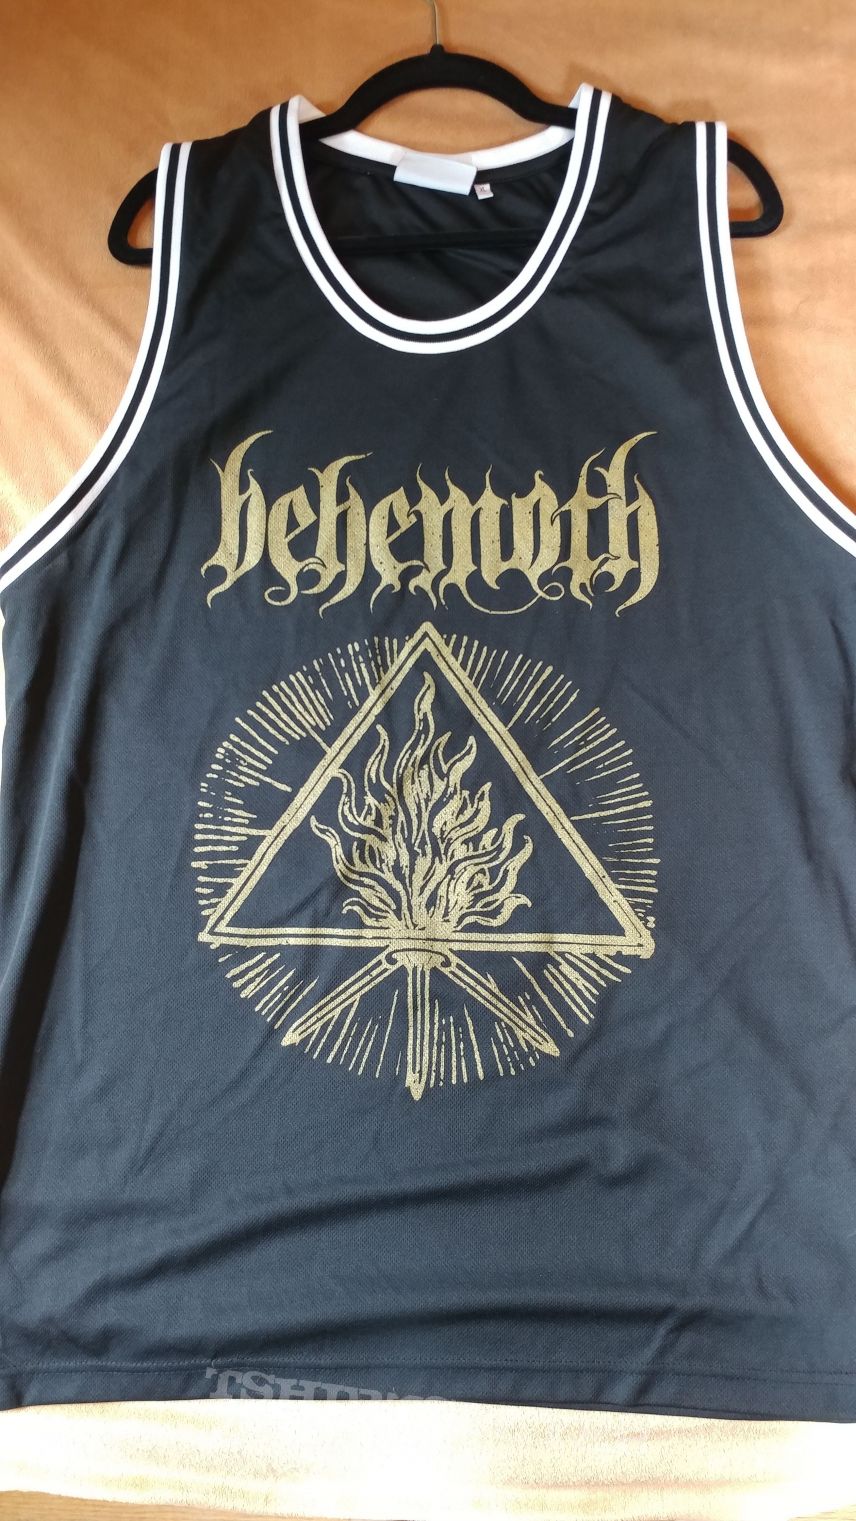 Behemoth jersey